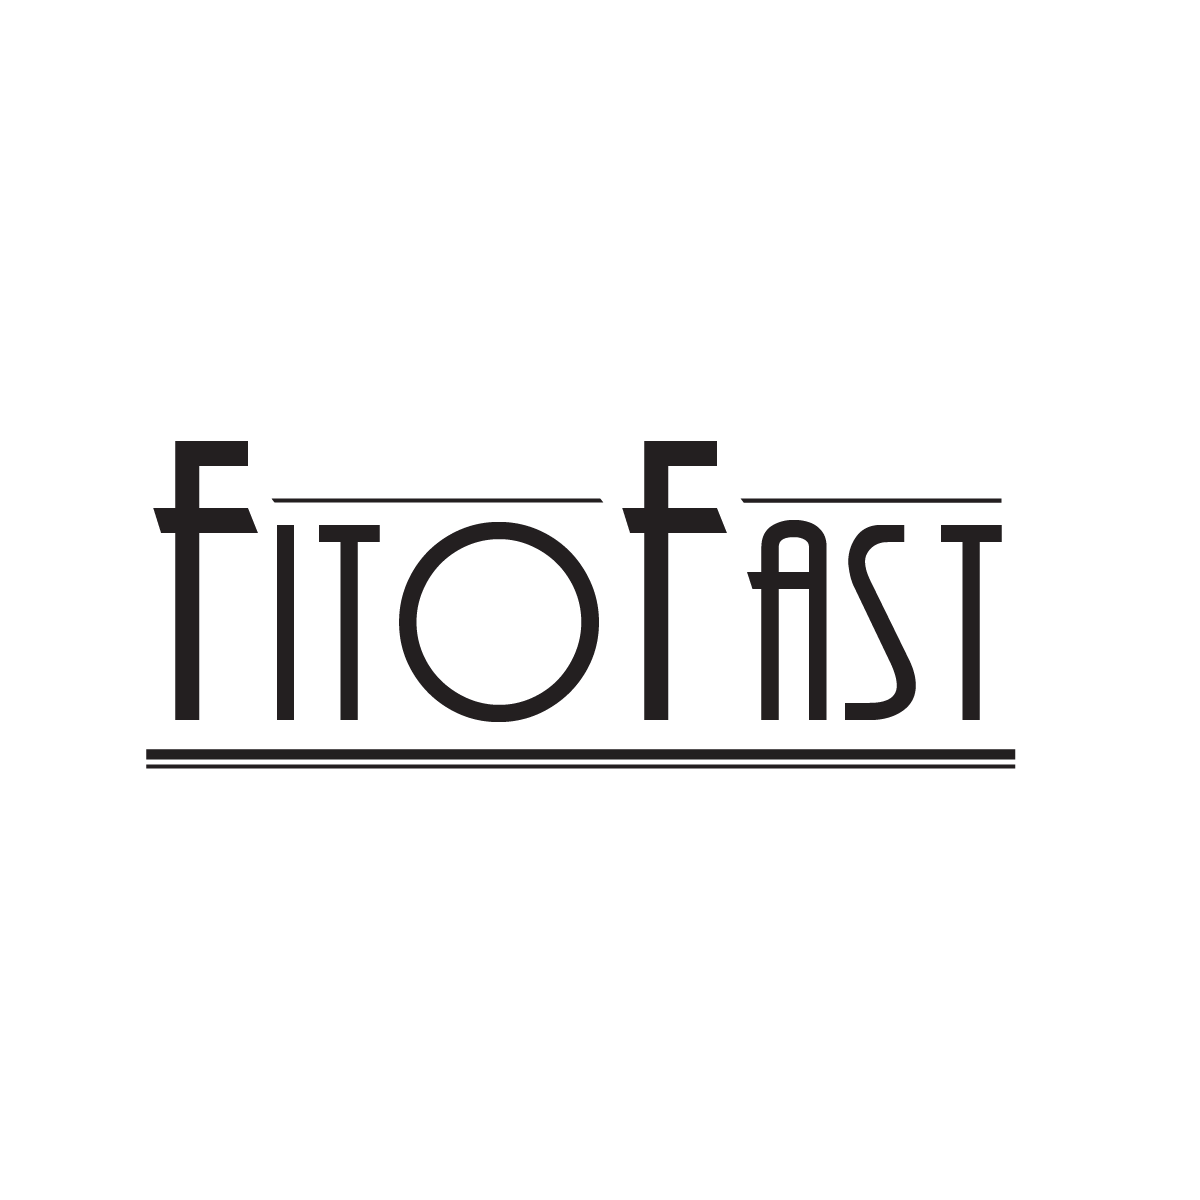 FitoFast LLC Logo